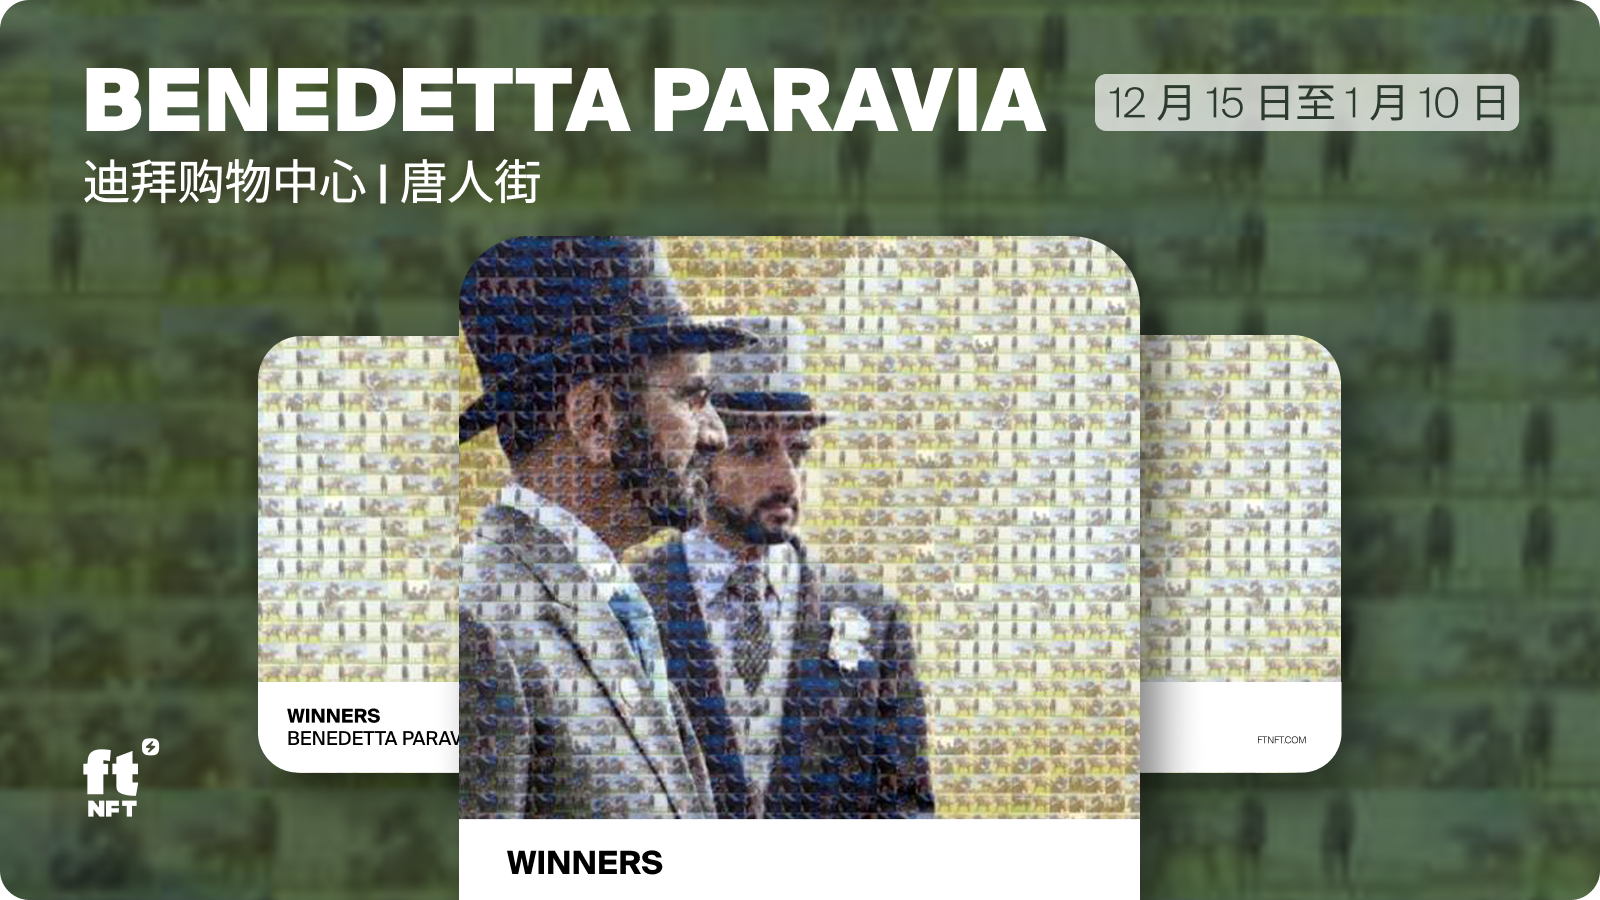 Benedetta Paravia的Winners在ftNFT上展示